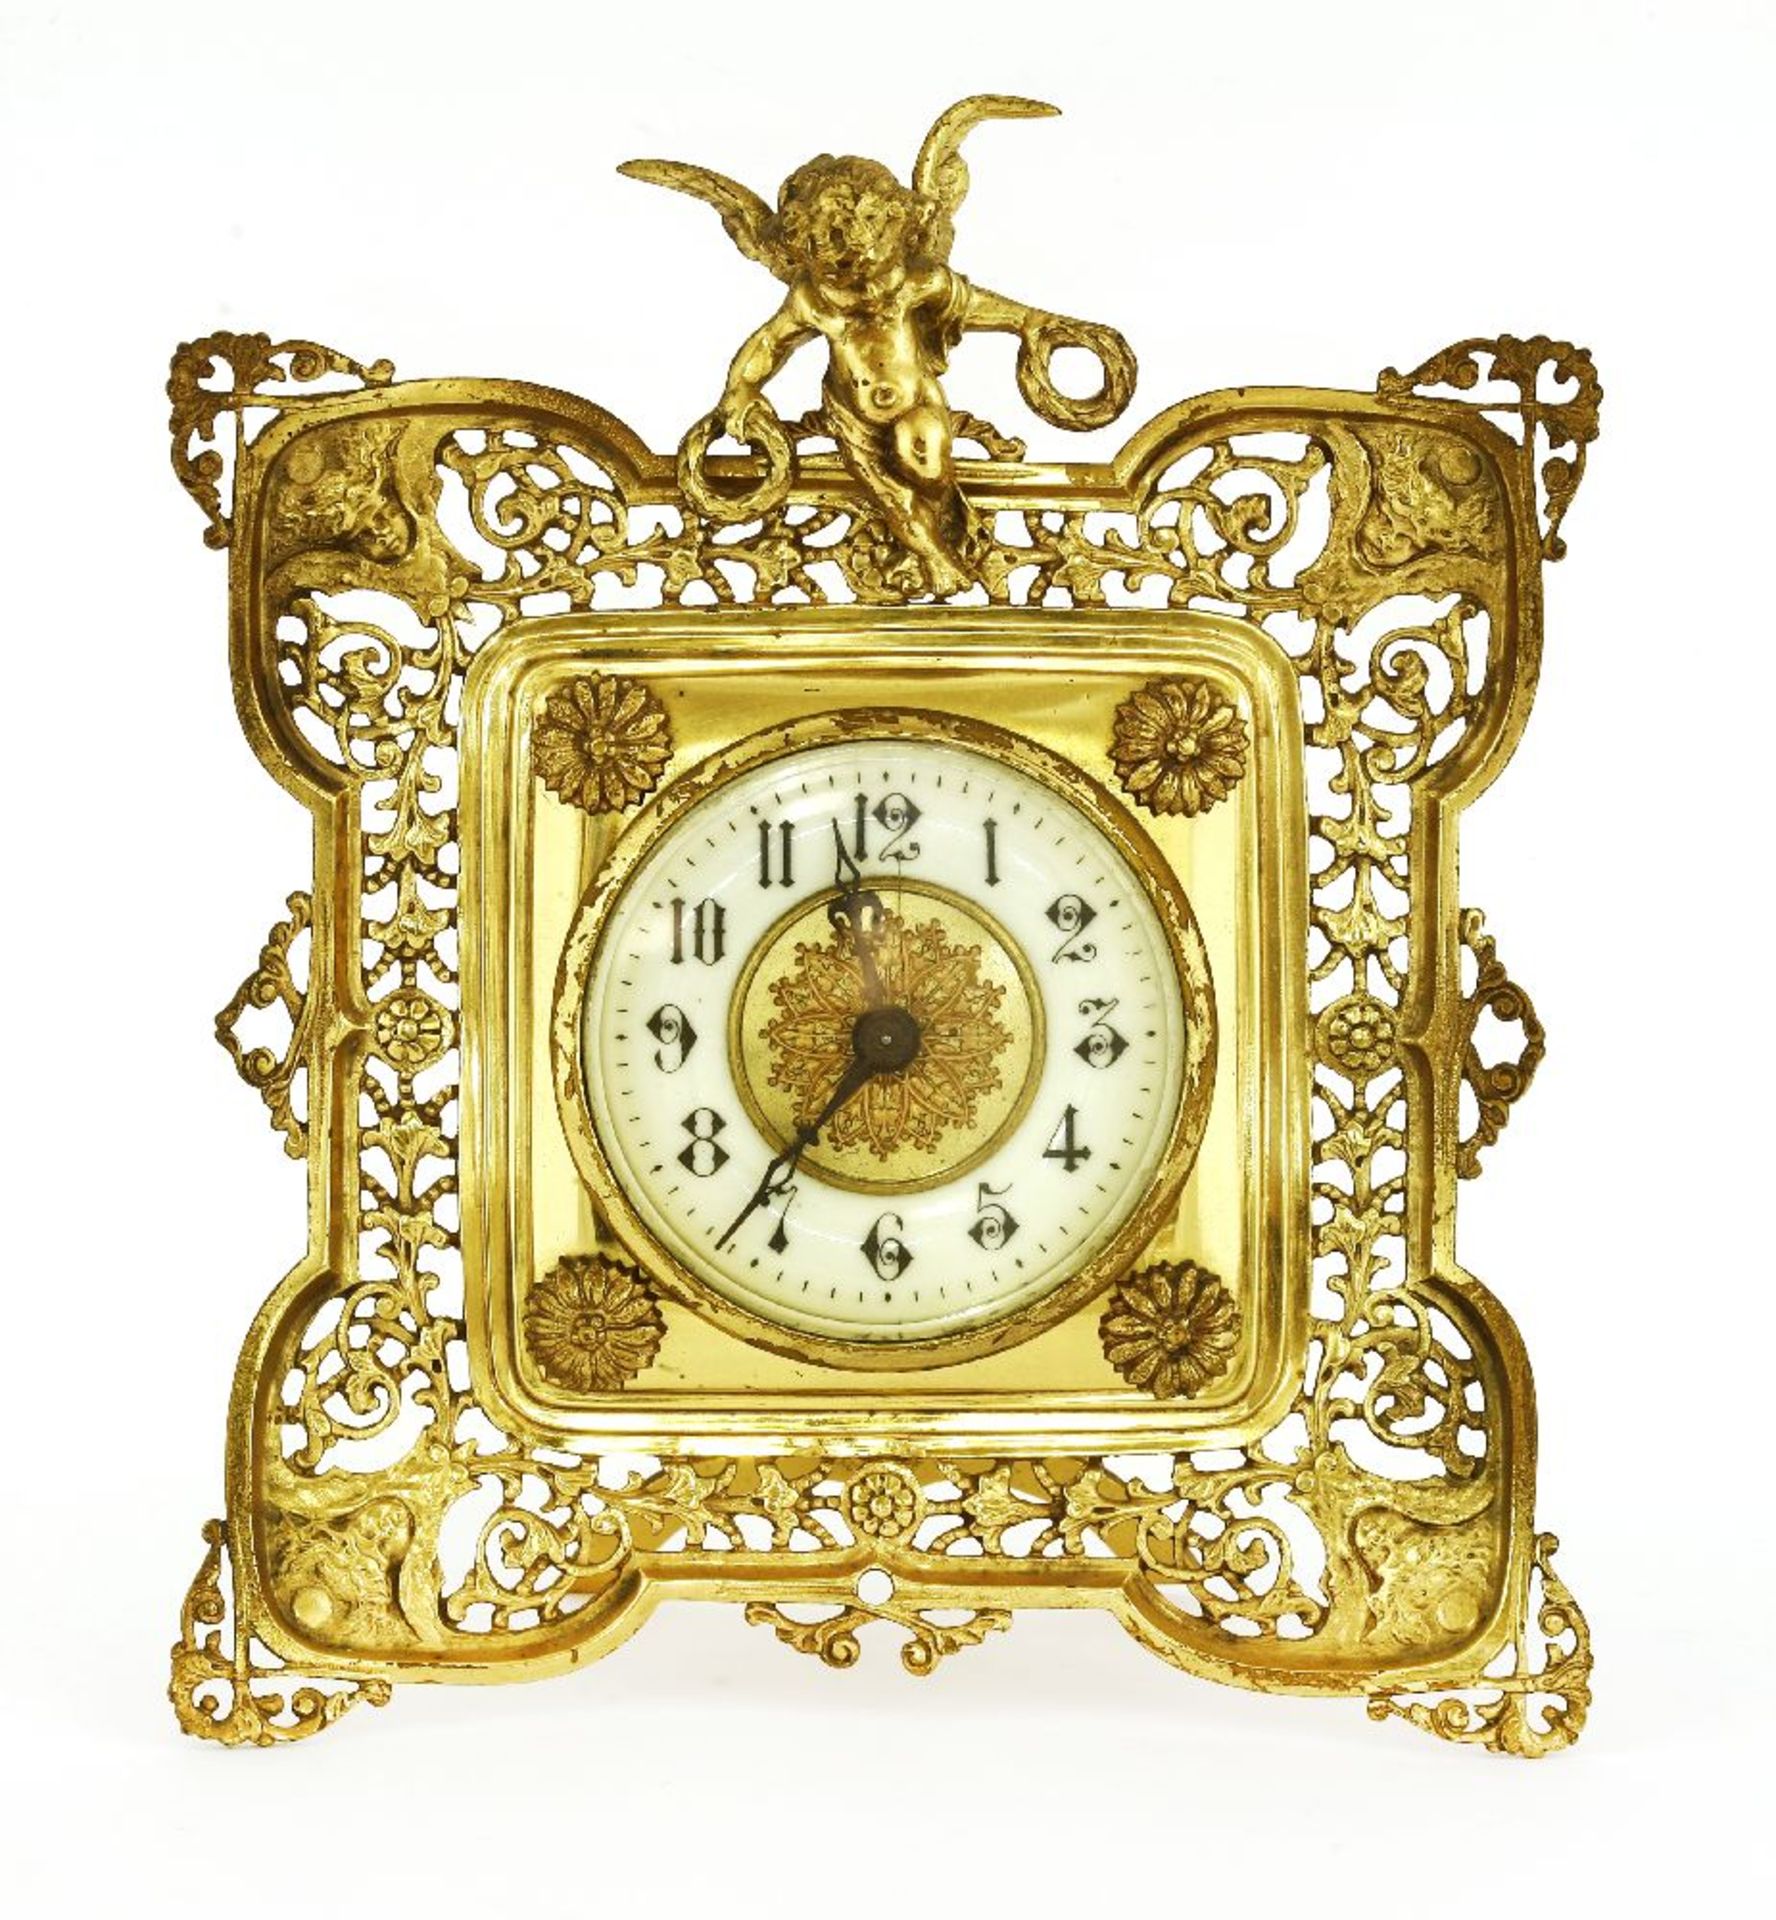 A Continental gilt metal strut-form clock,with a cherub surmount,27cm high